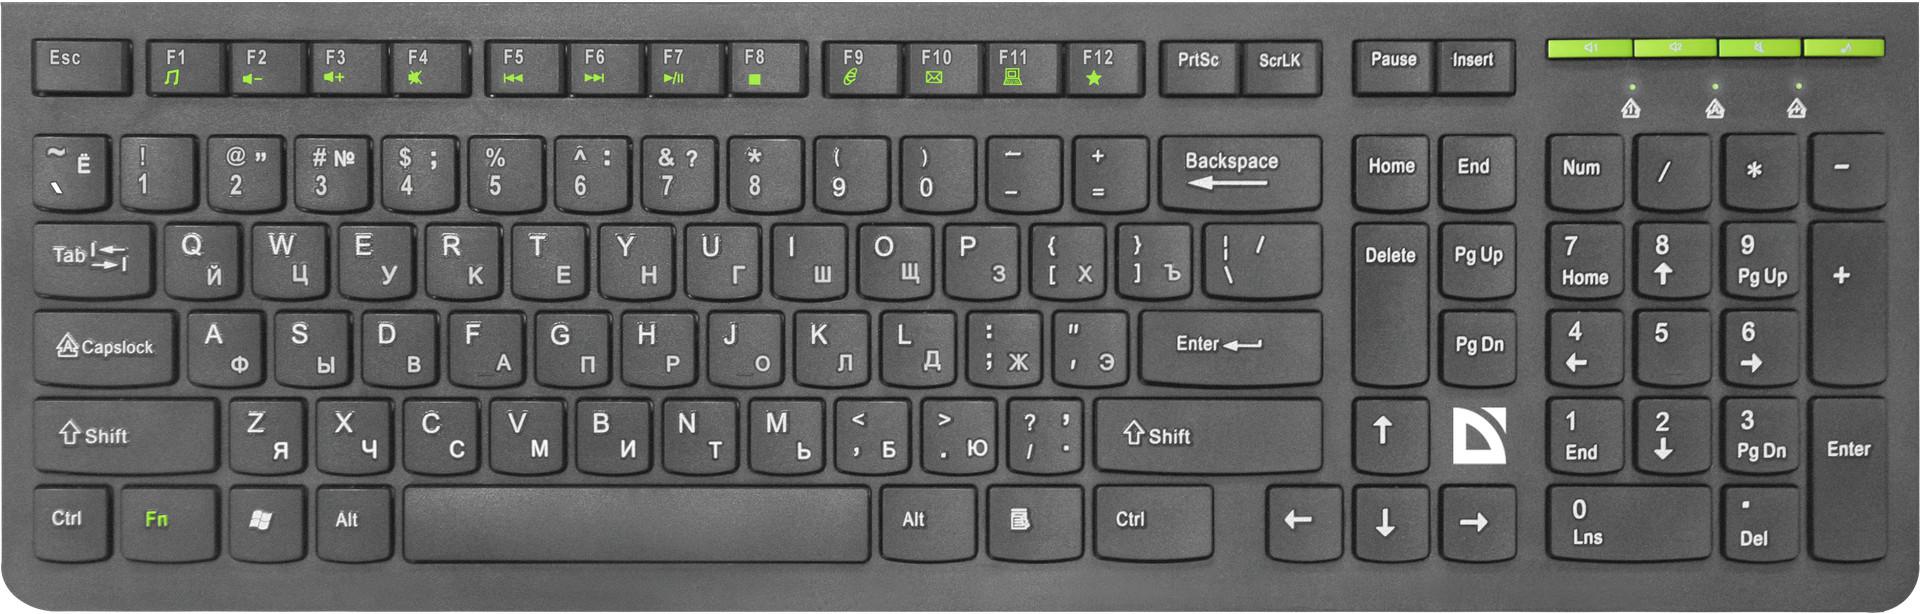 клавиатура компьютера раскладка фото